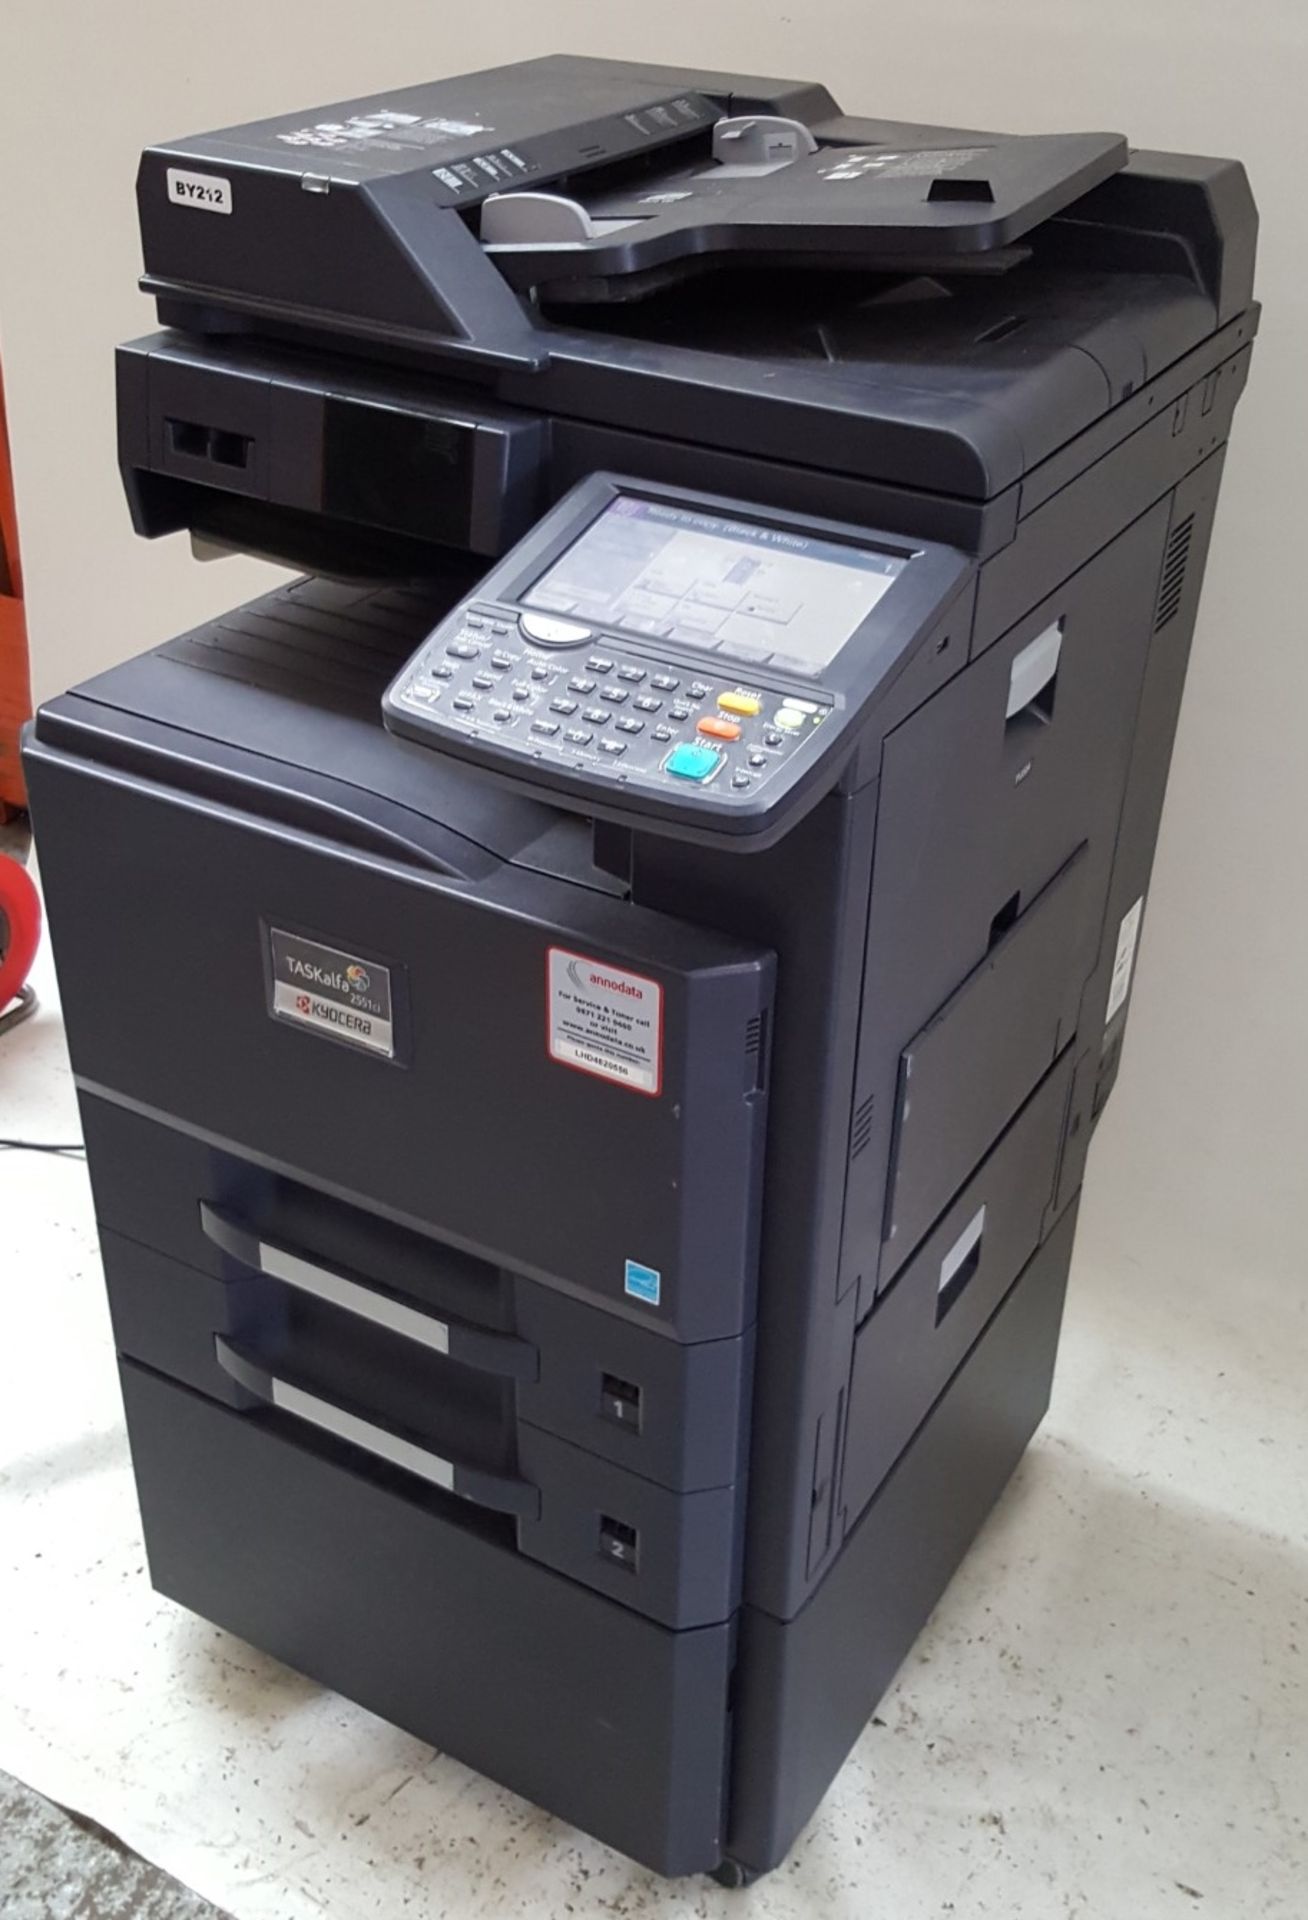 1 x KYOCERA TASKALFA 2551ci Multifunction Office Printer - Ref BY212 - Image 5 of 5